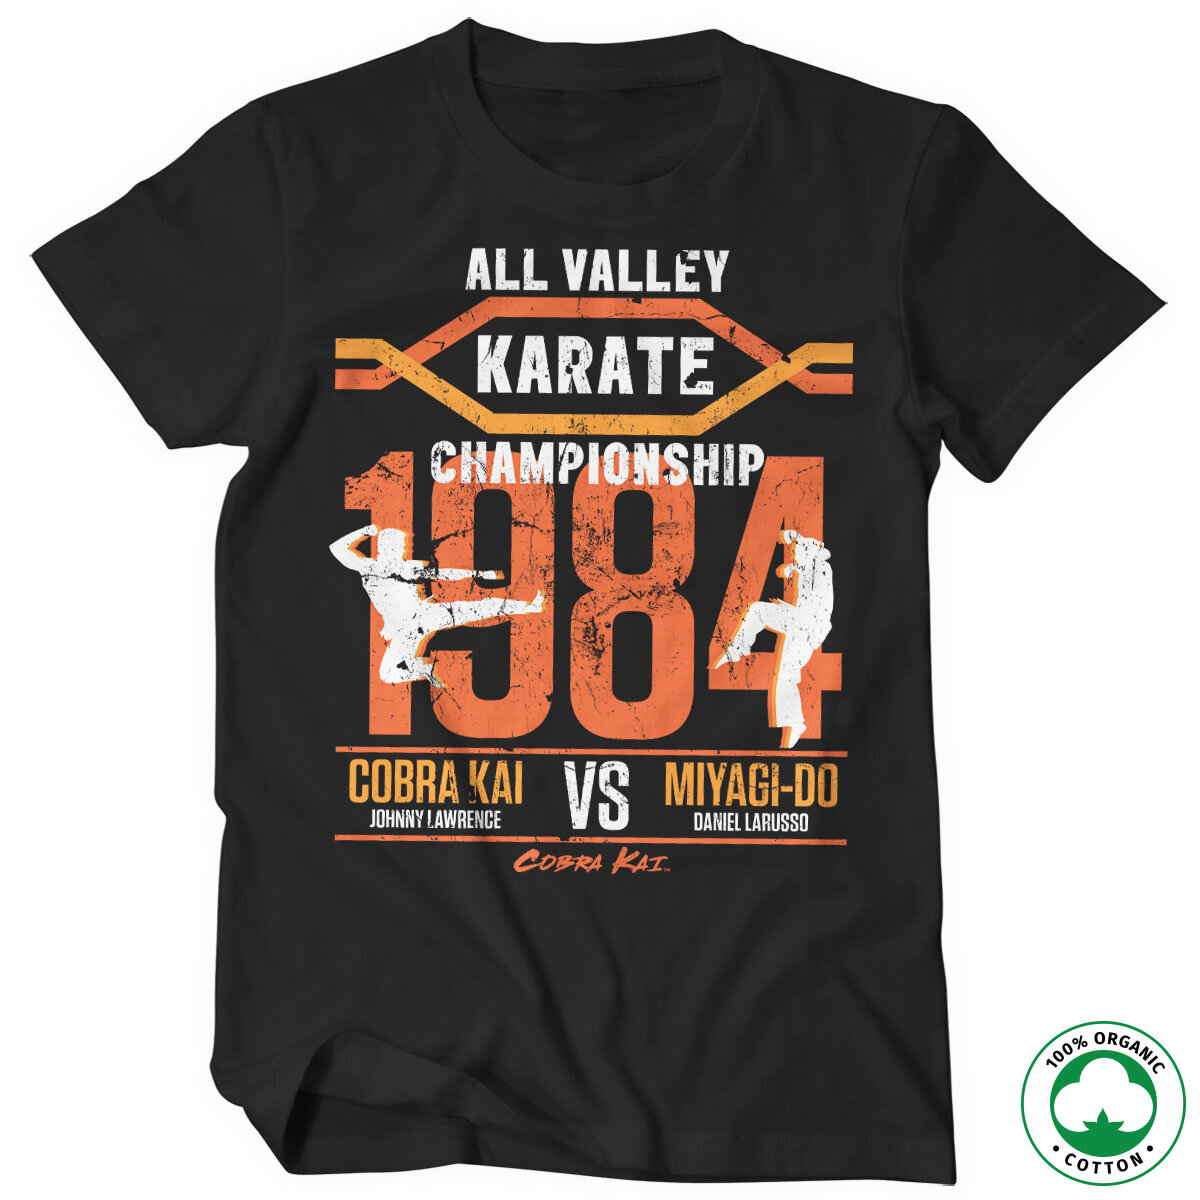 All Valley Karate Championship Organic T-Shirt